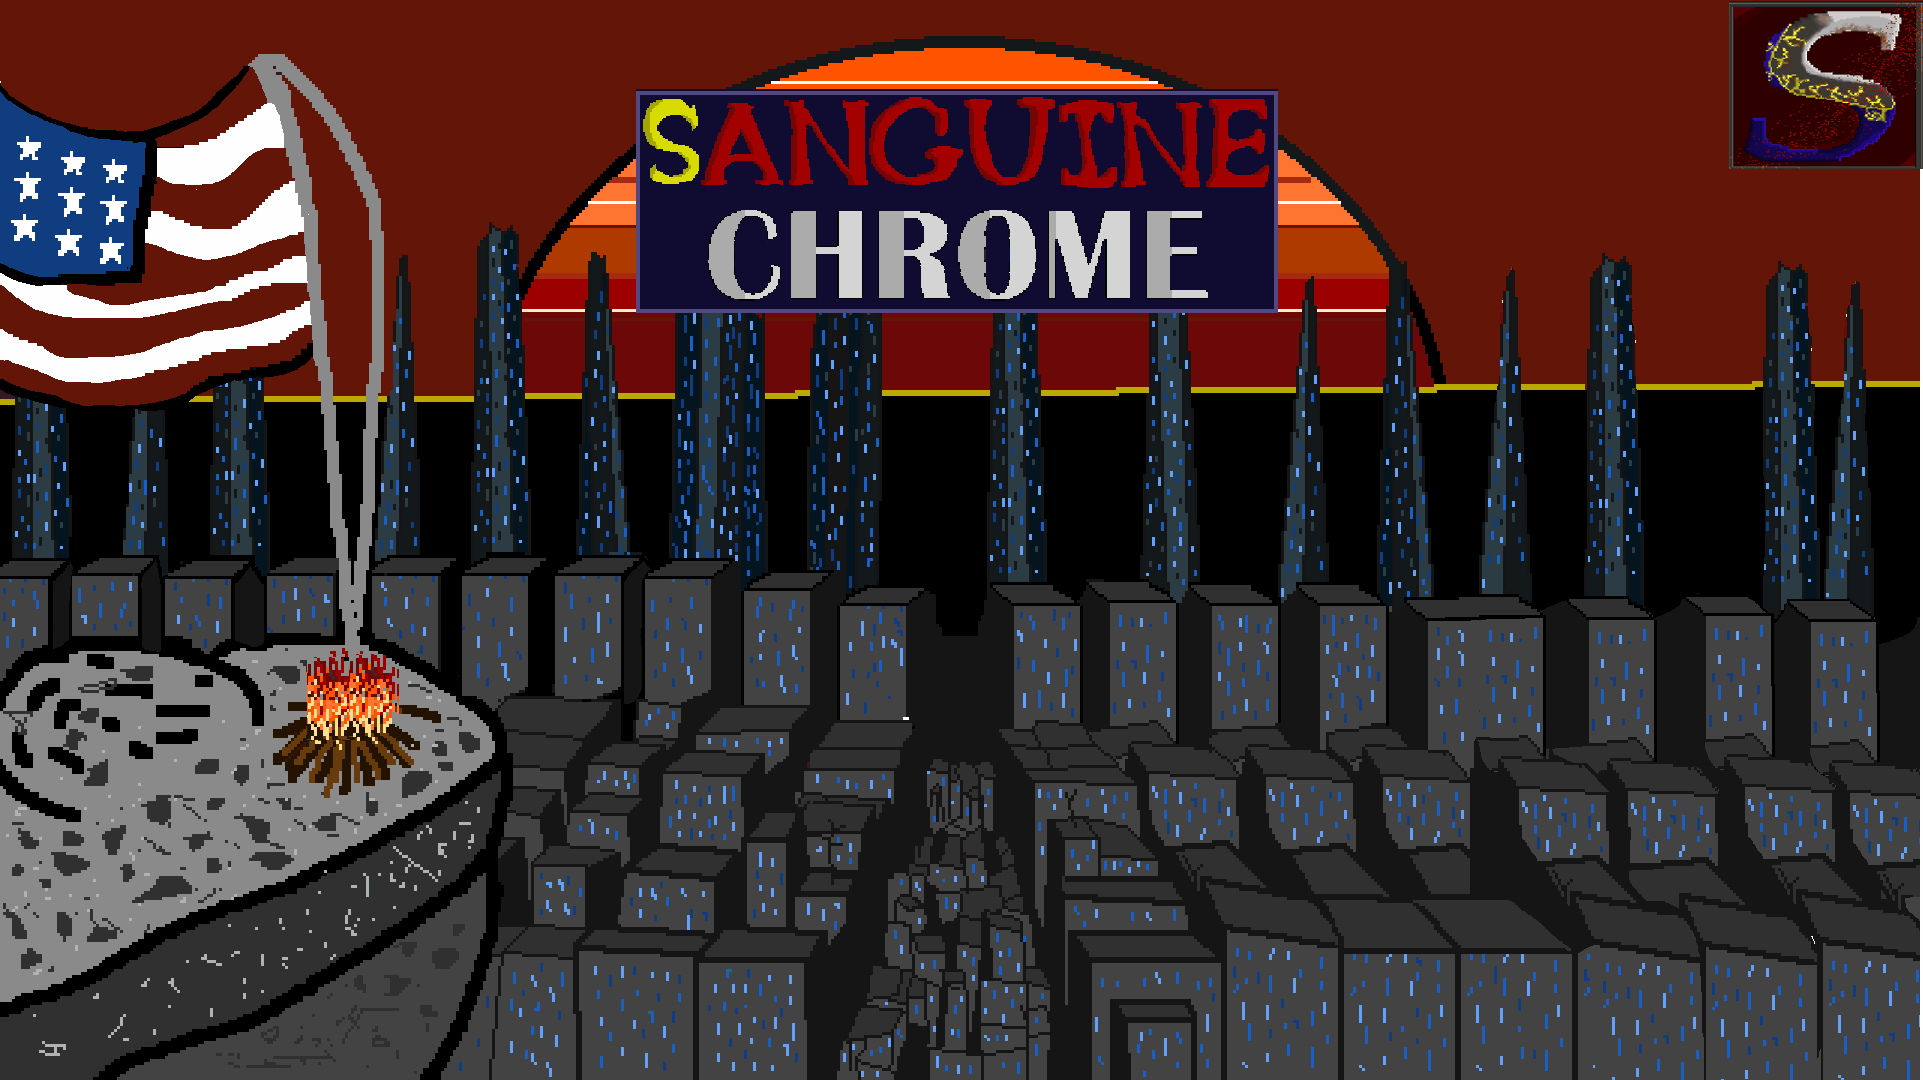 Sanguine Chrome